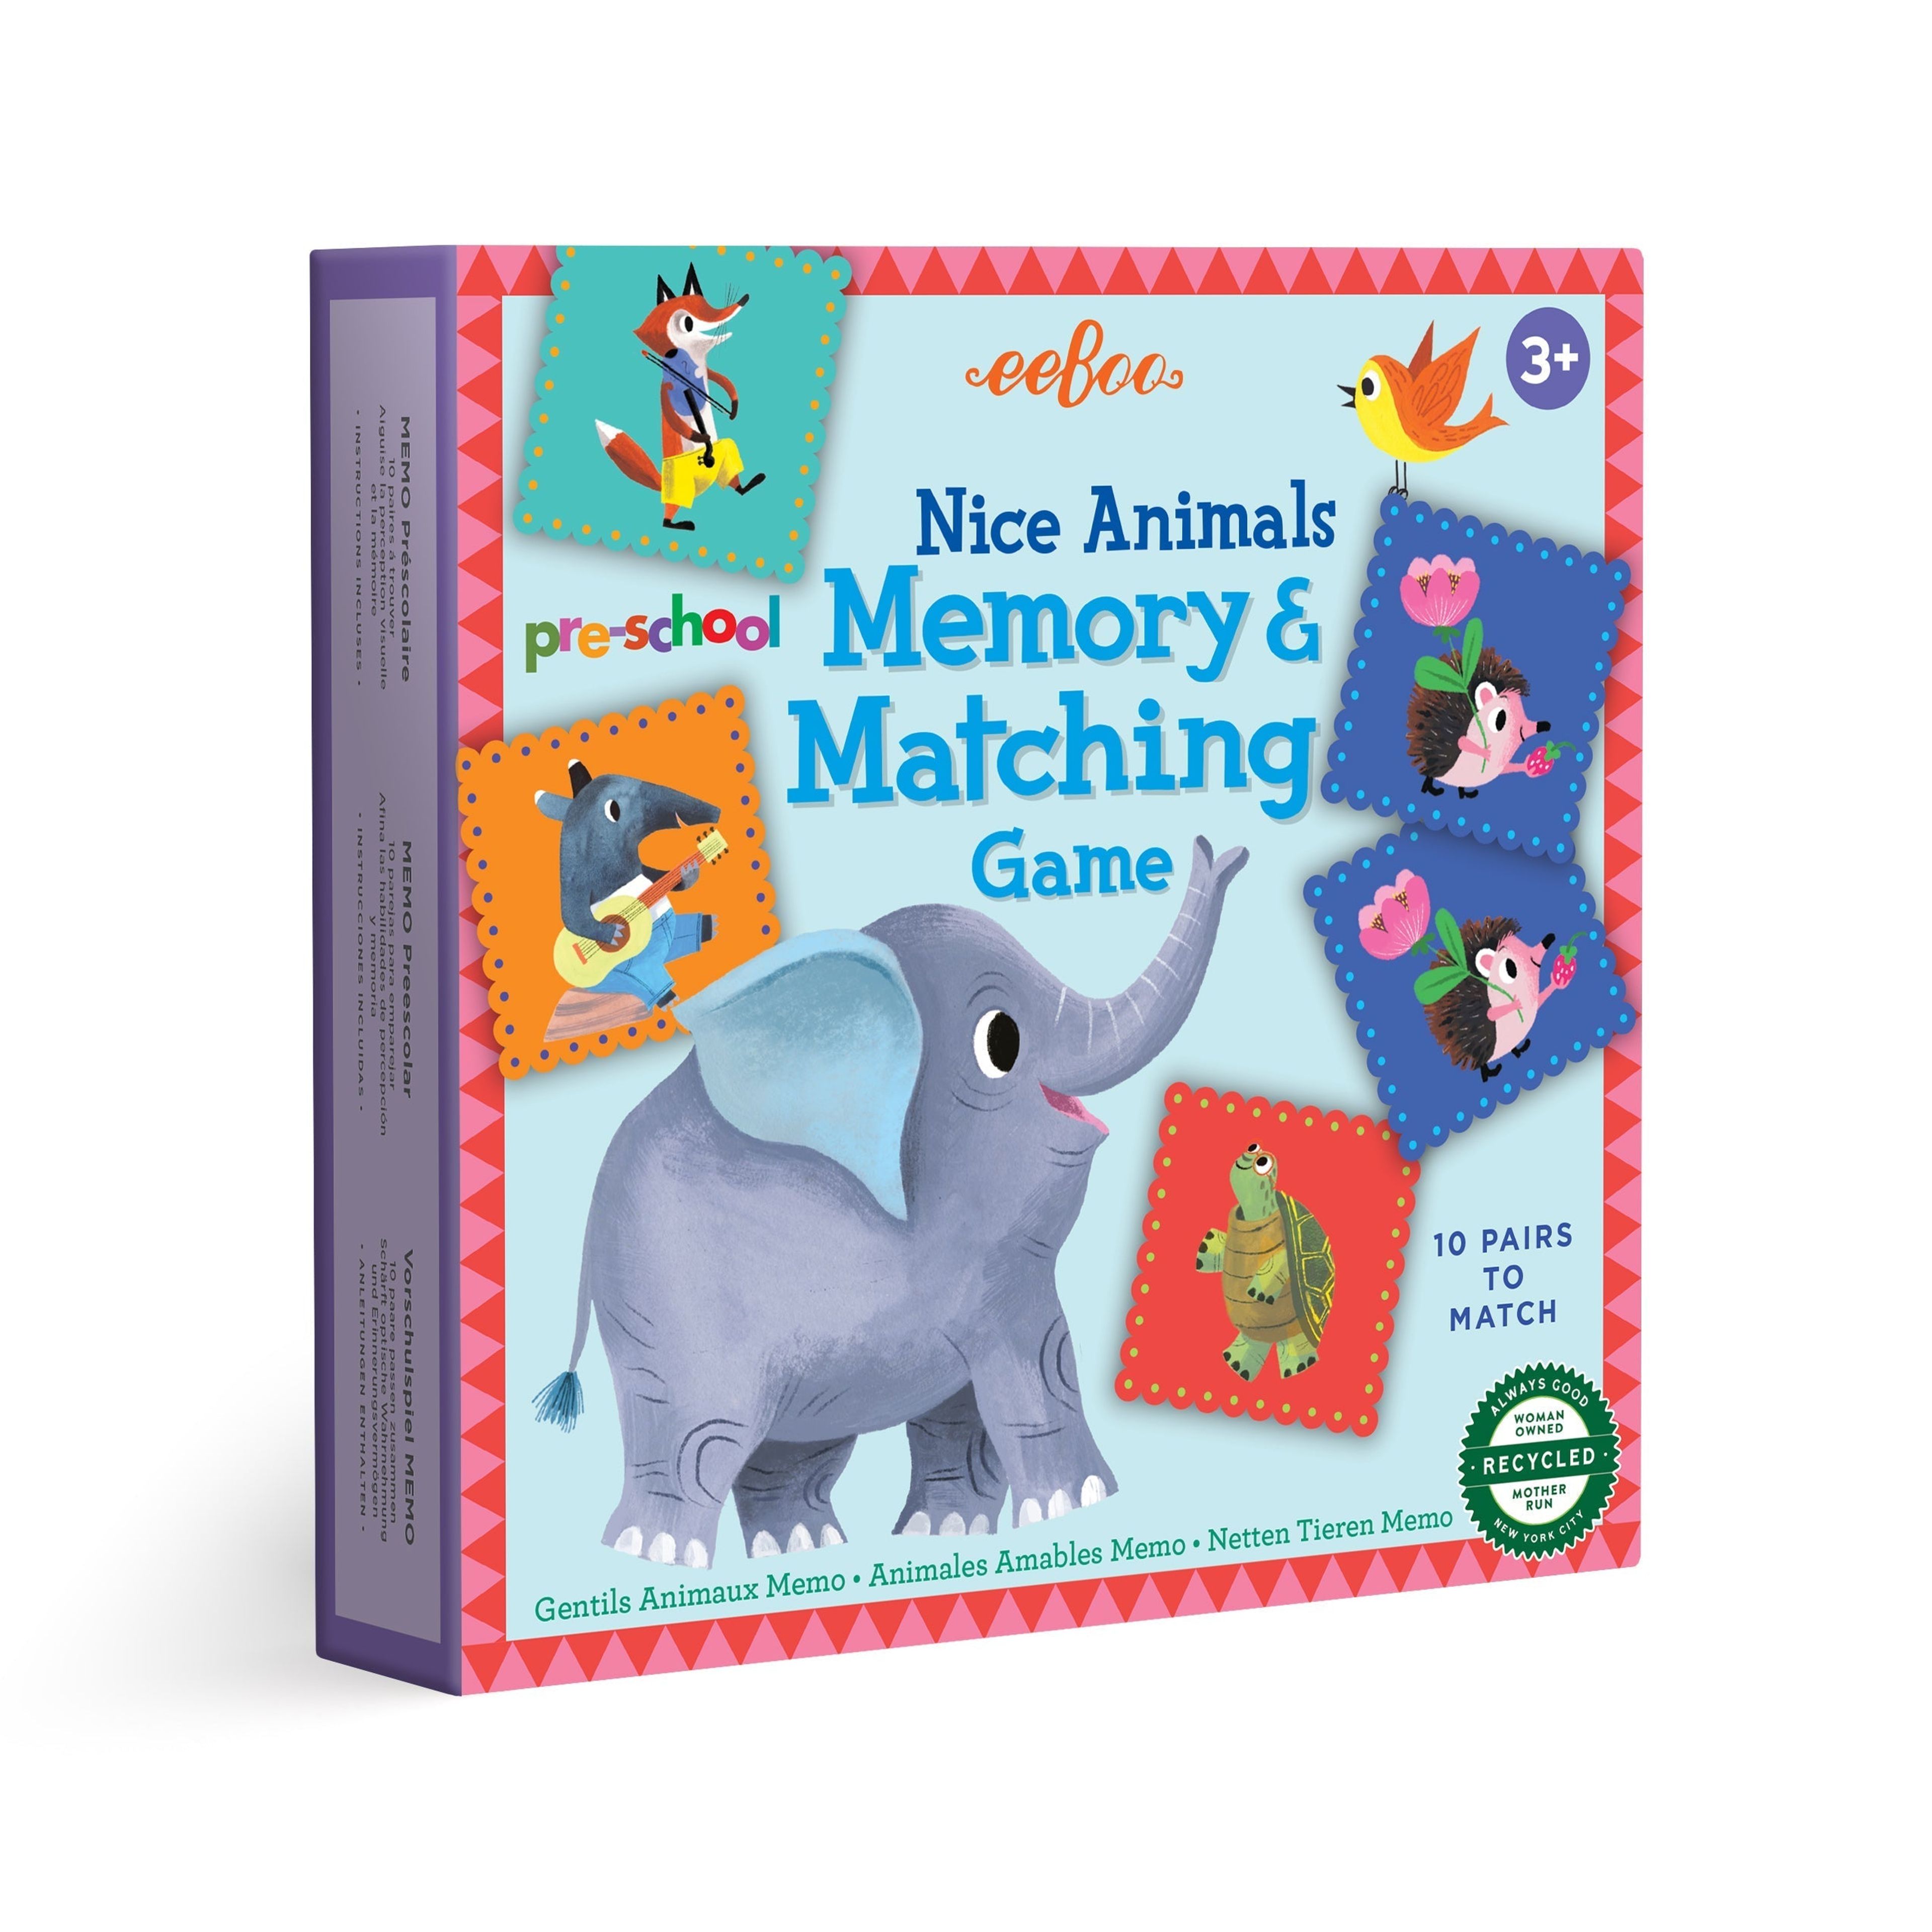 Pre-school Nice Animals Memory Game